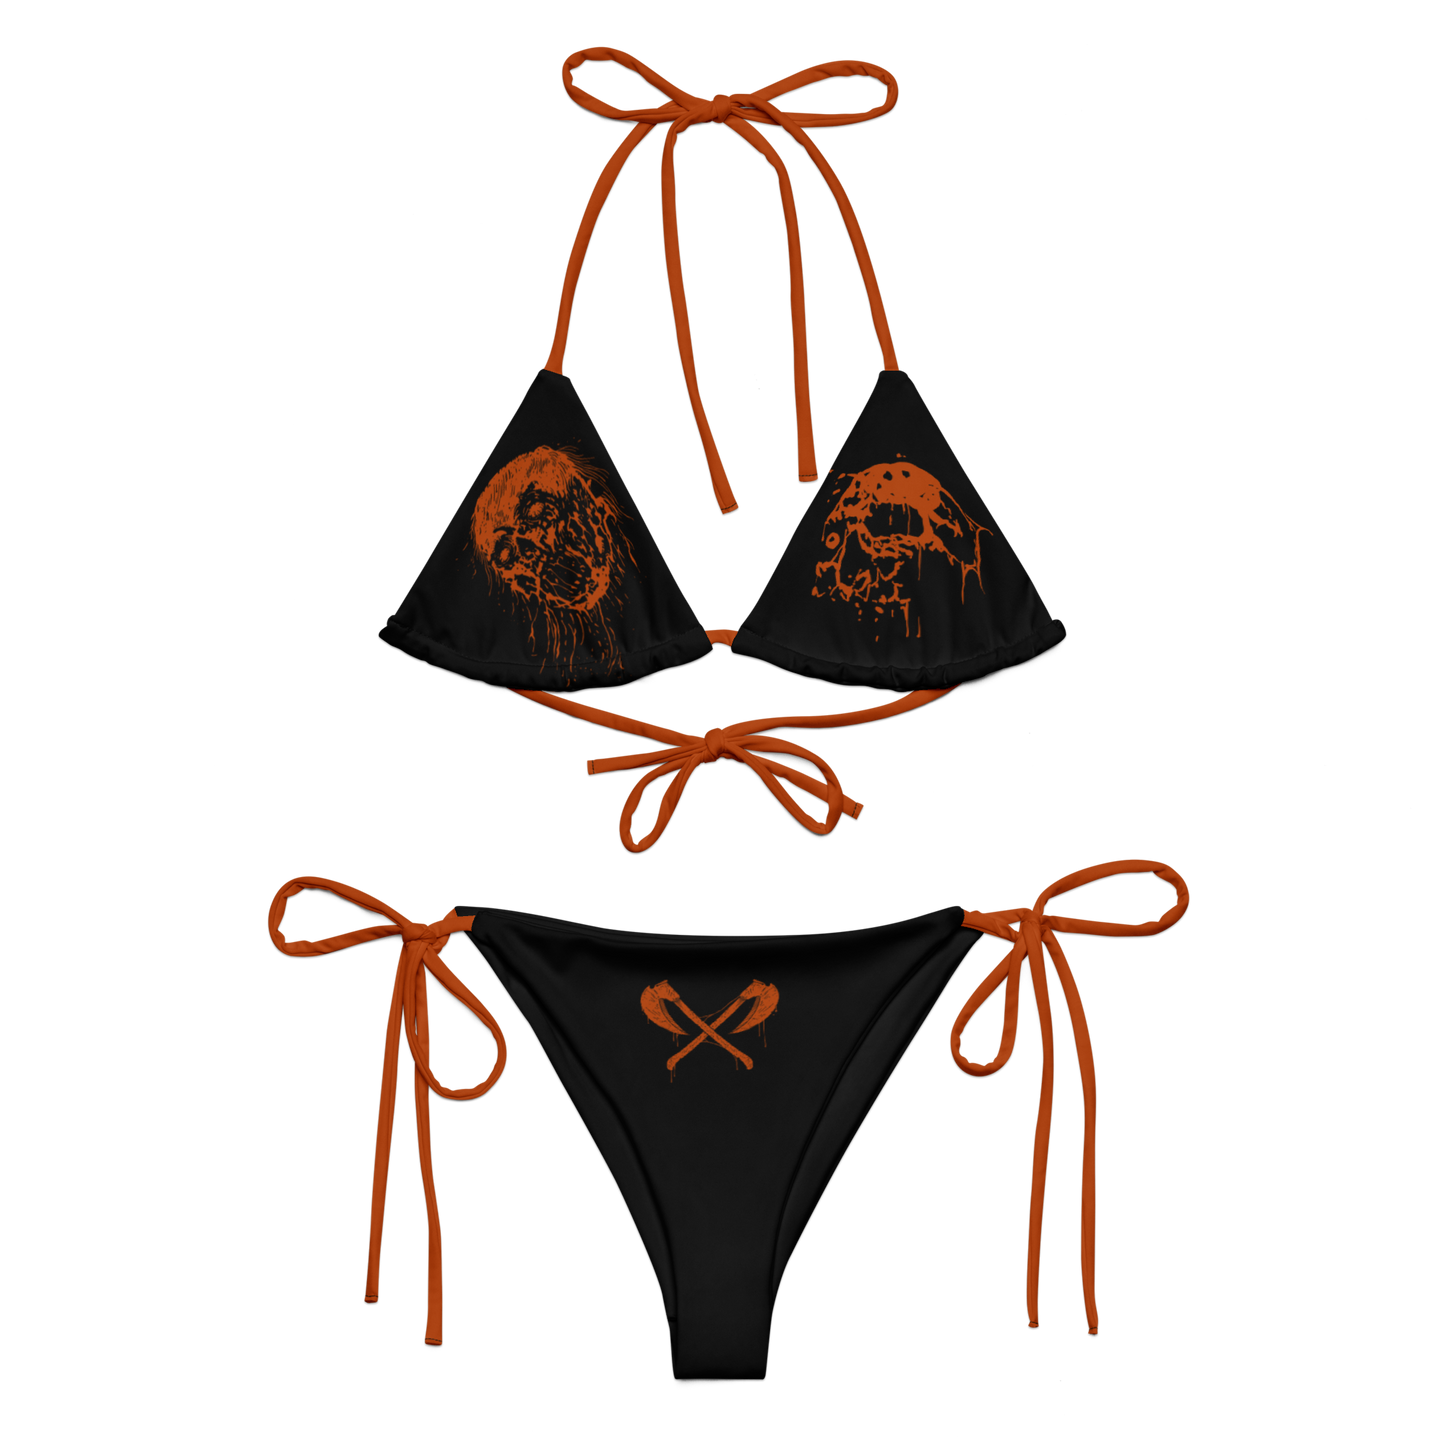 Hellfekted Orange Skulls official bikini swimsuit by Metal Mistress